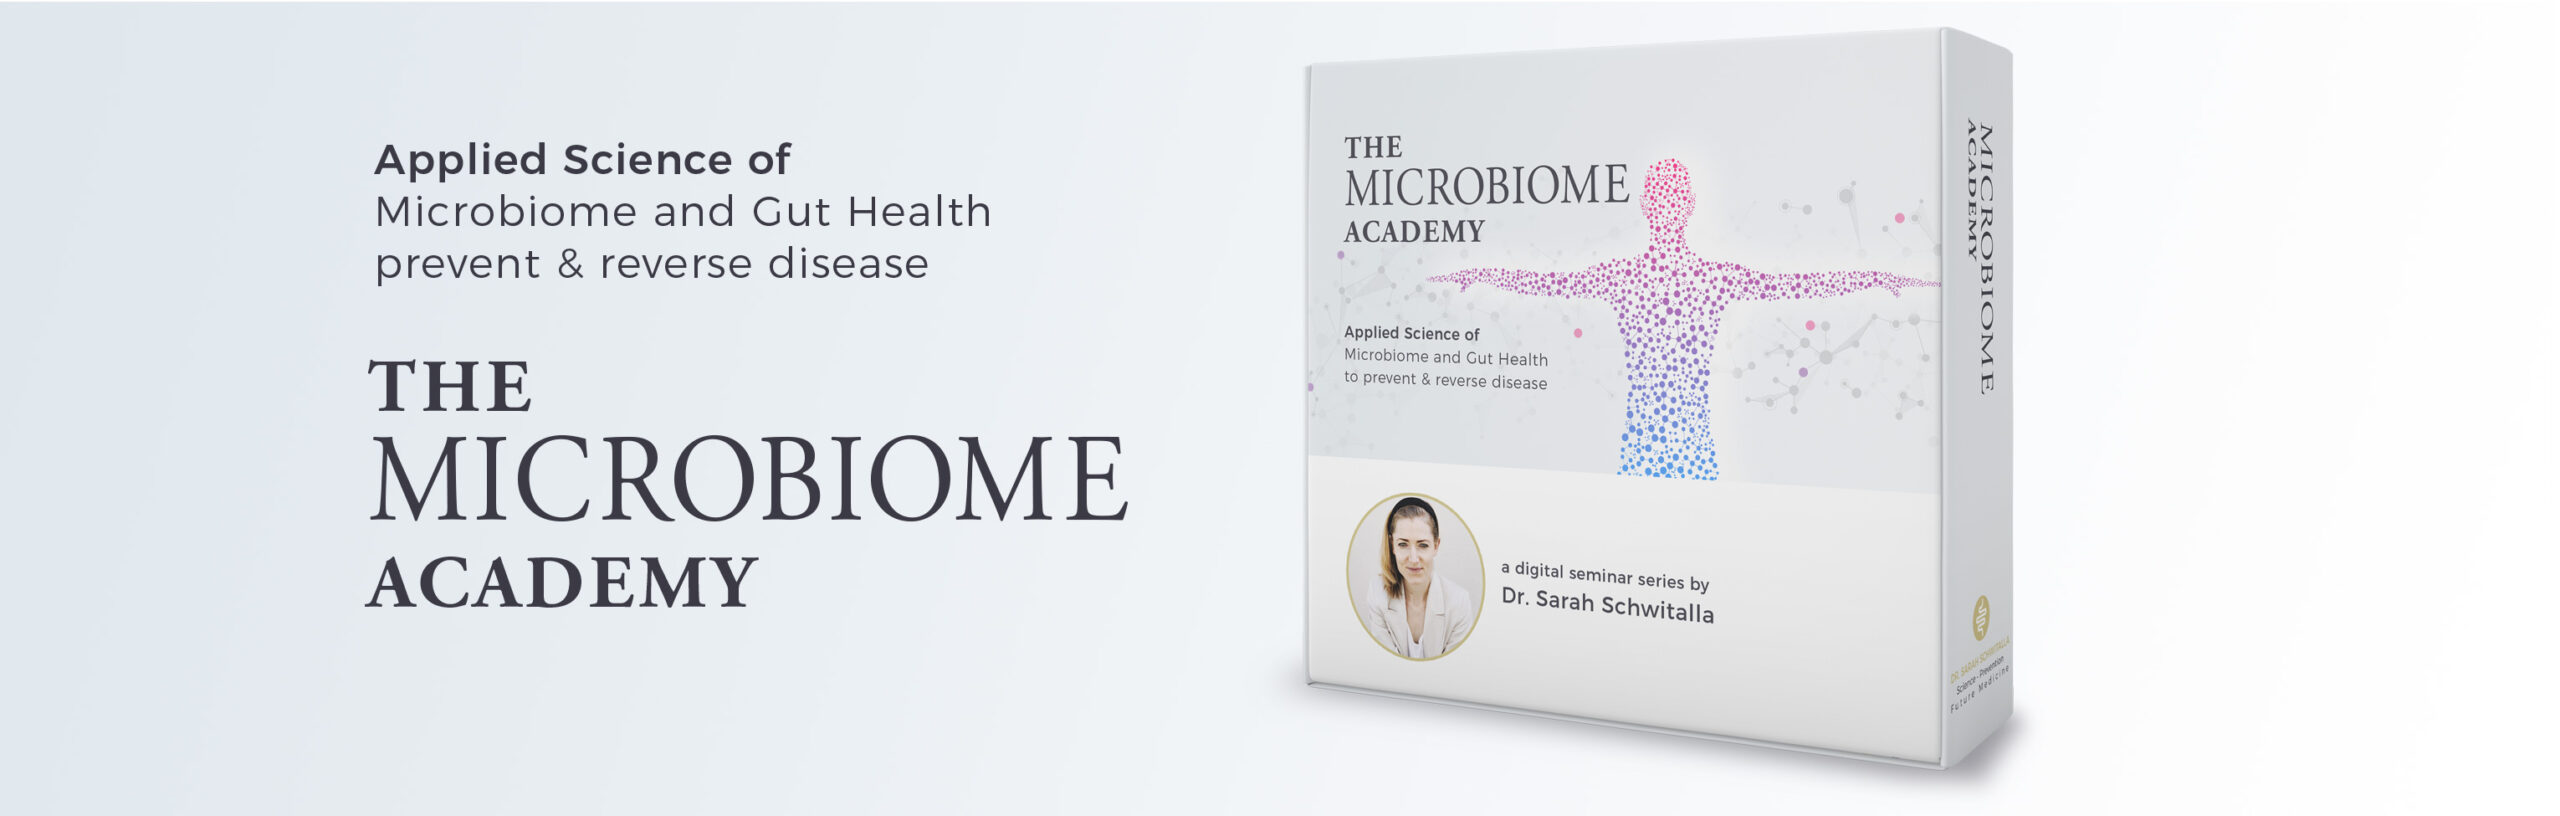 Microbiome academy